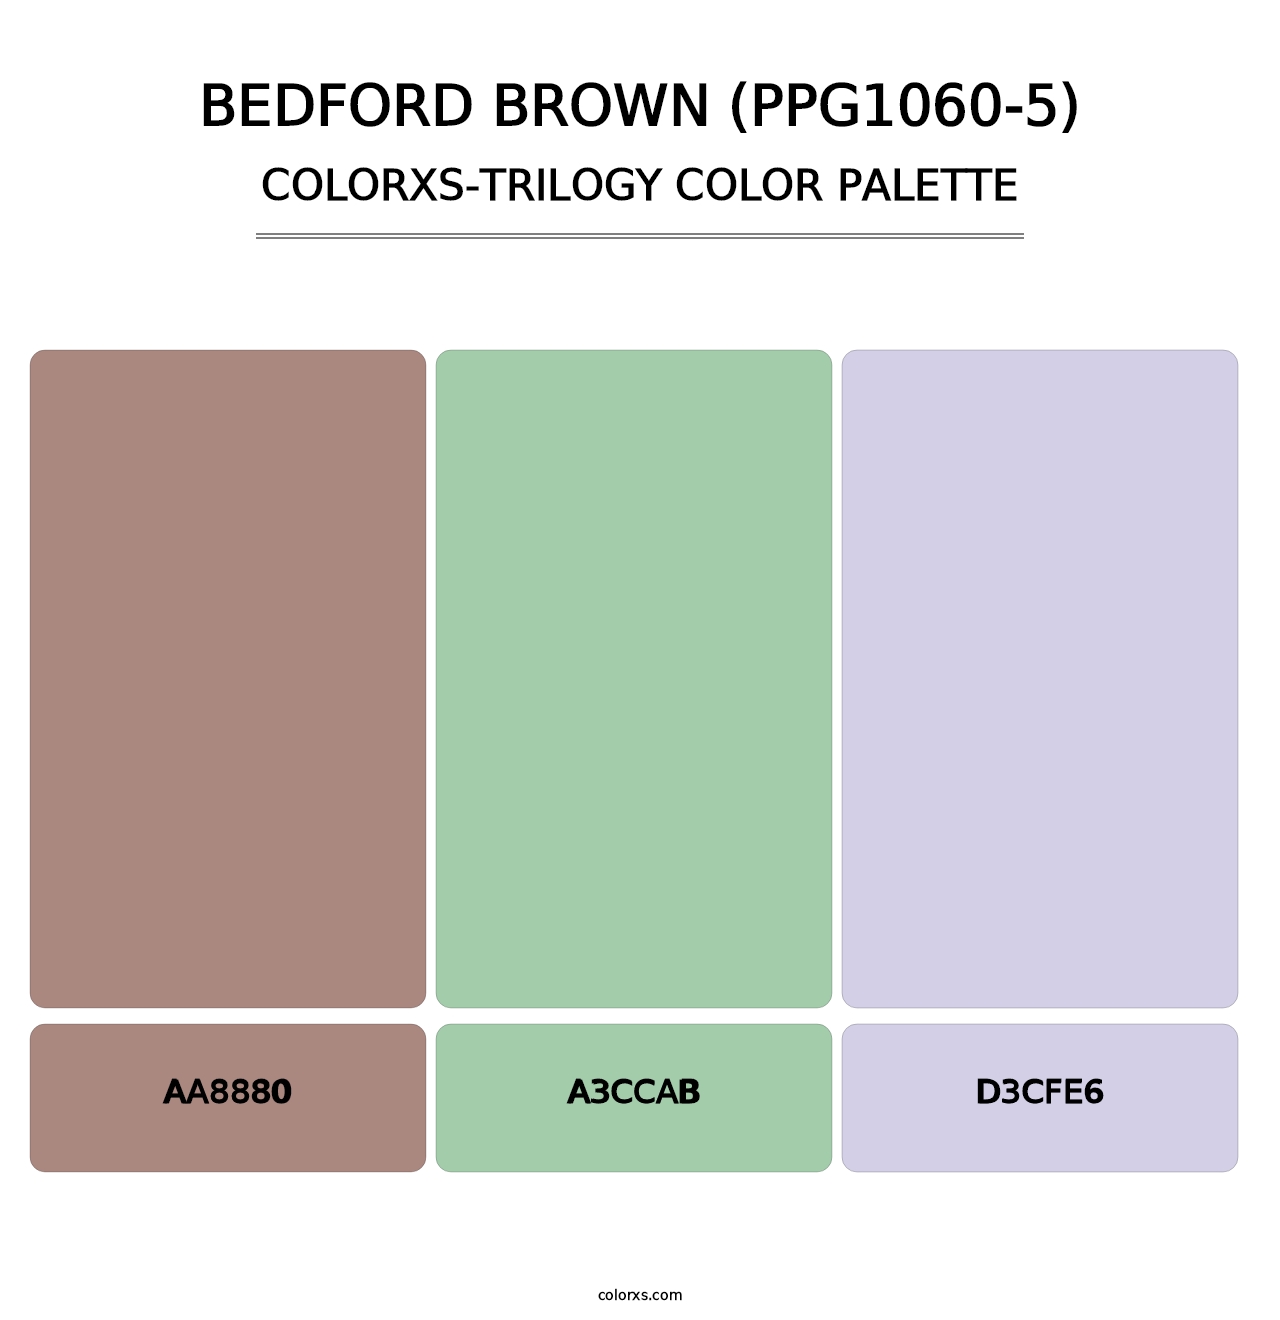 Bedford Brown (PPG1060-5) - Colorxs Trilogy Palette